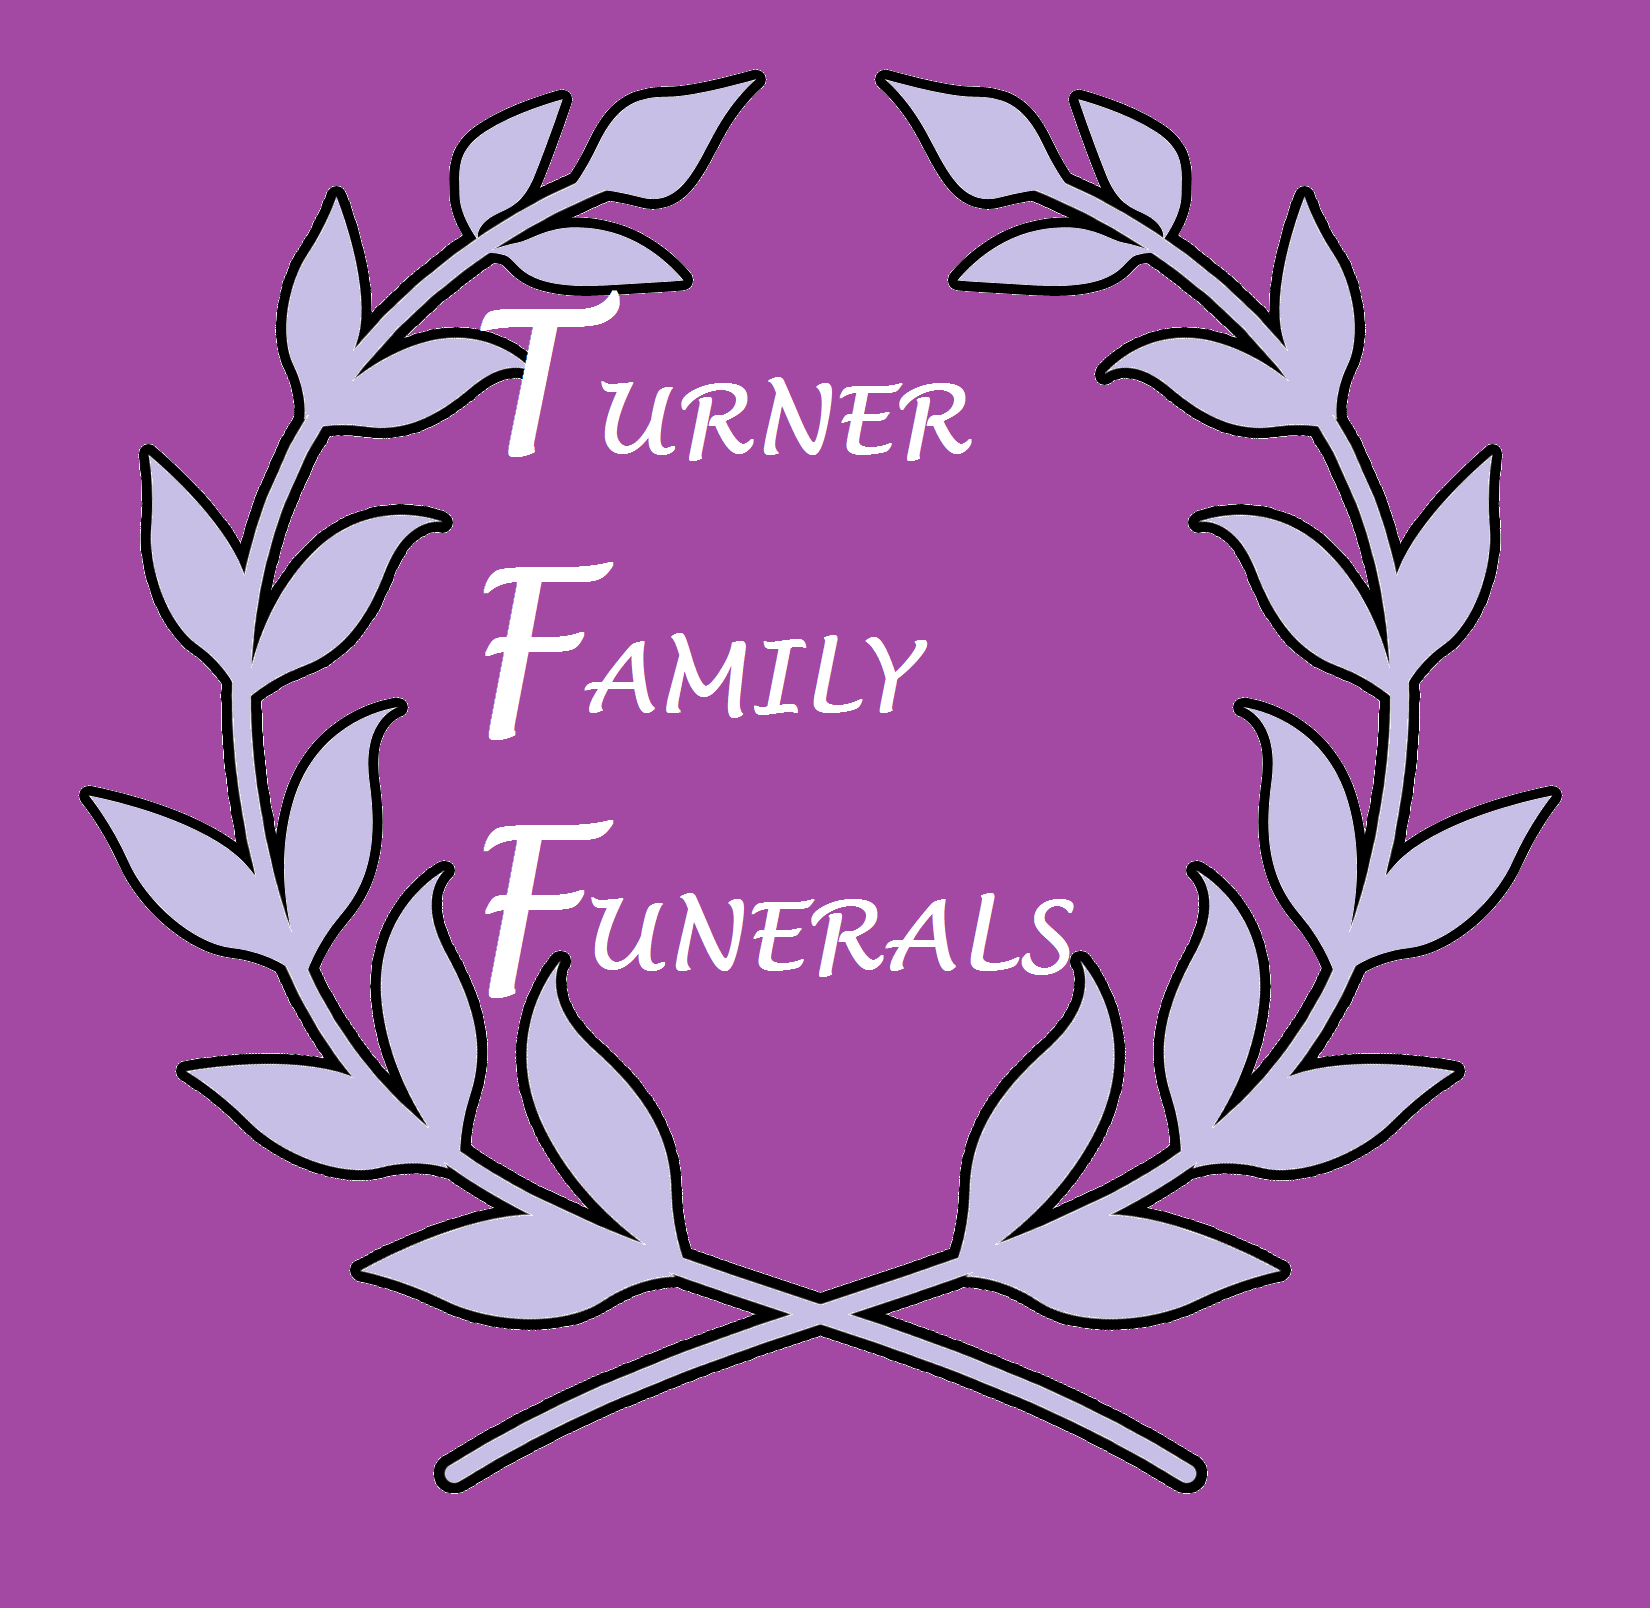 https://www.seoforsmallbusiness.com.au/wp-content/uploads/2021/06/Turner-Family-Funerals.png